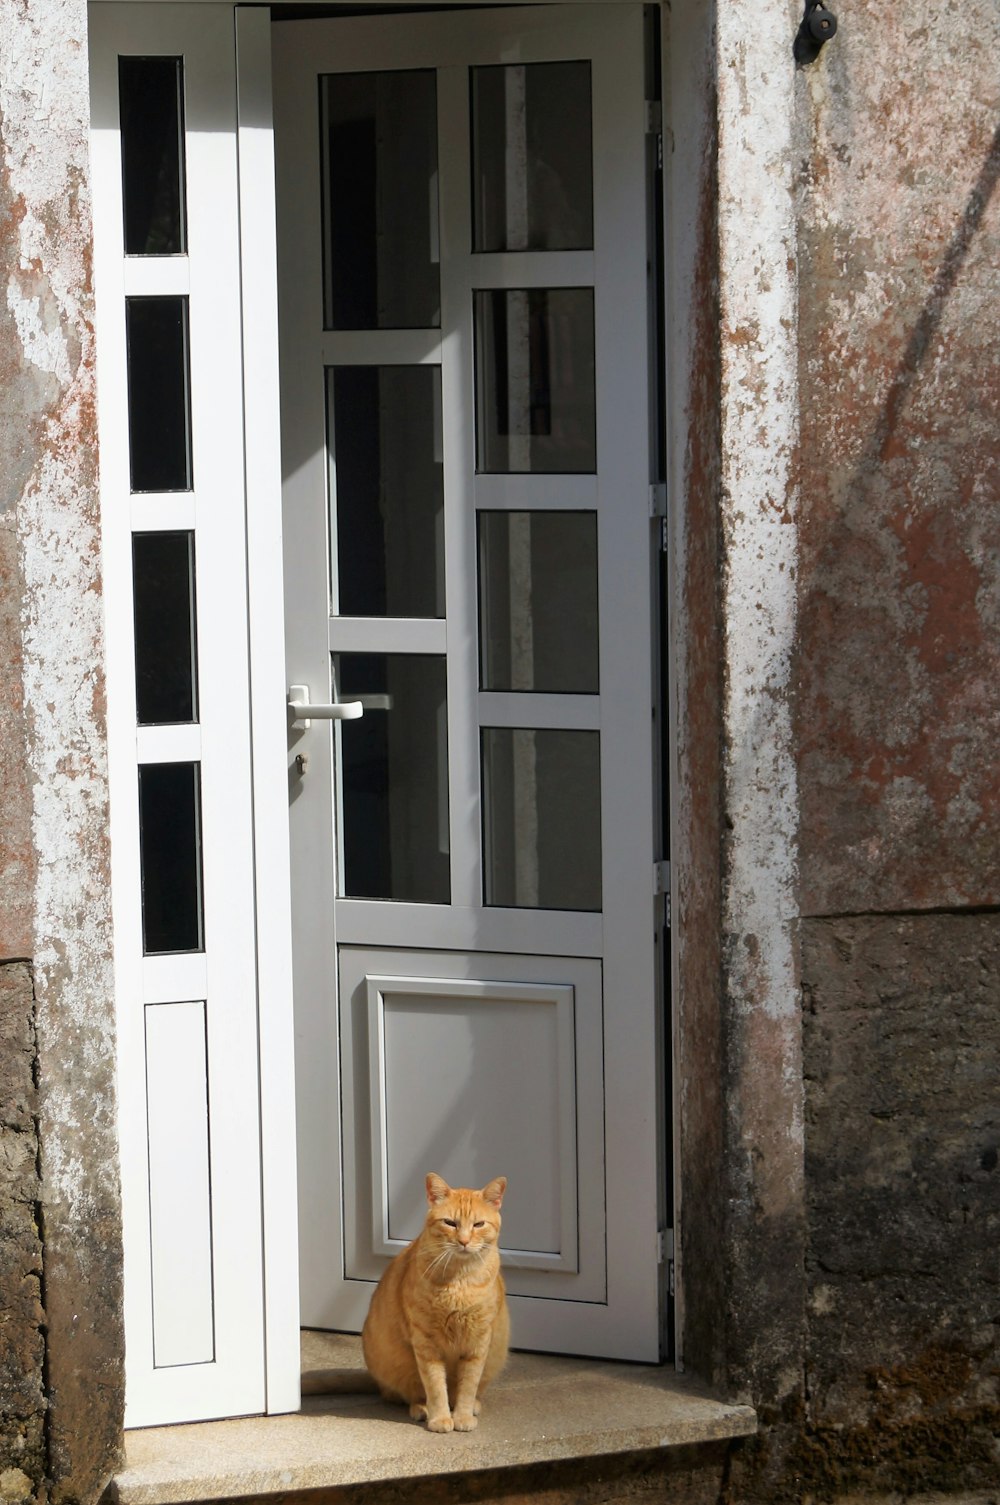 orange tabby cat on doorway